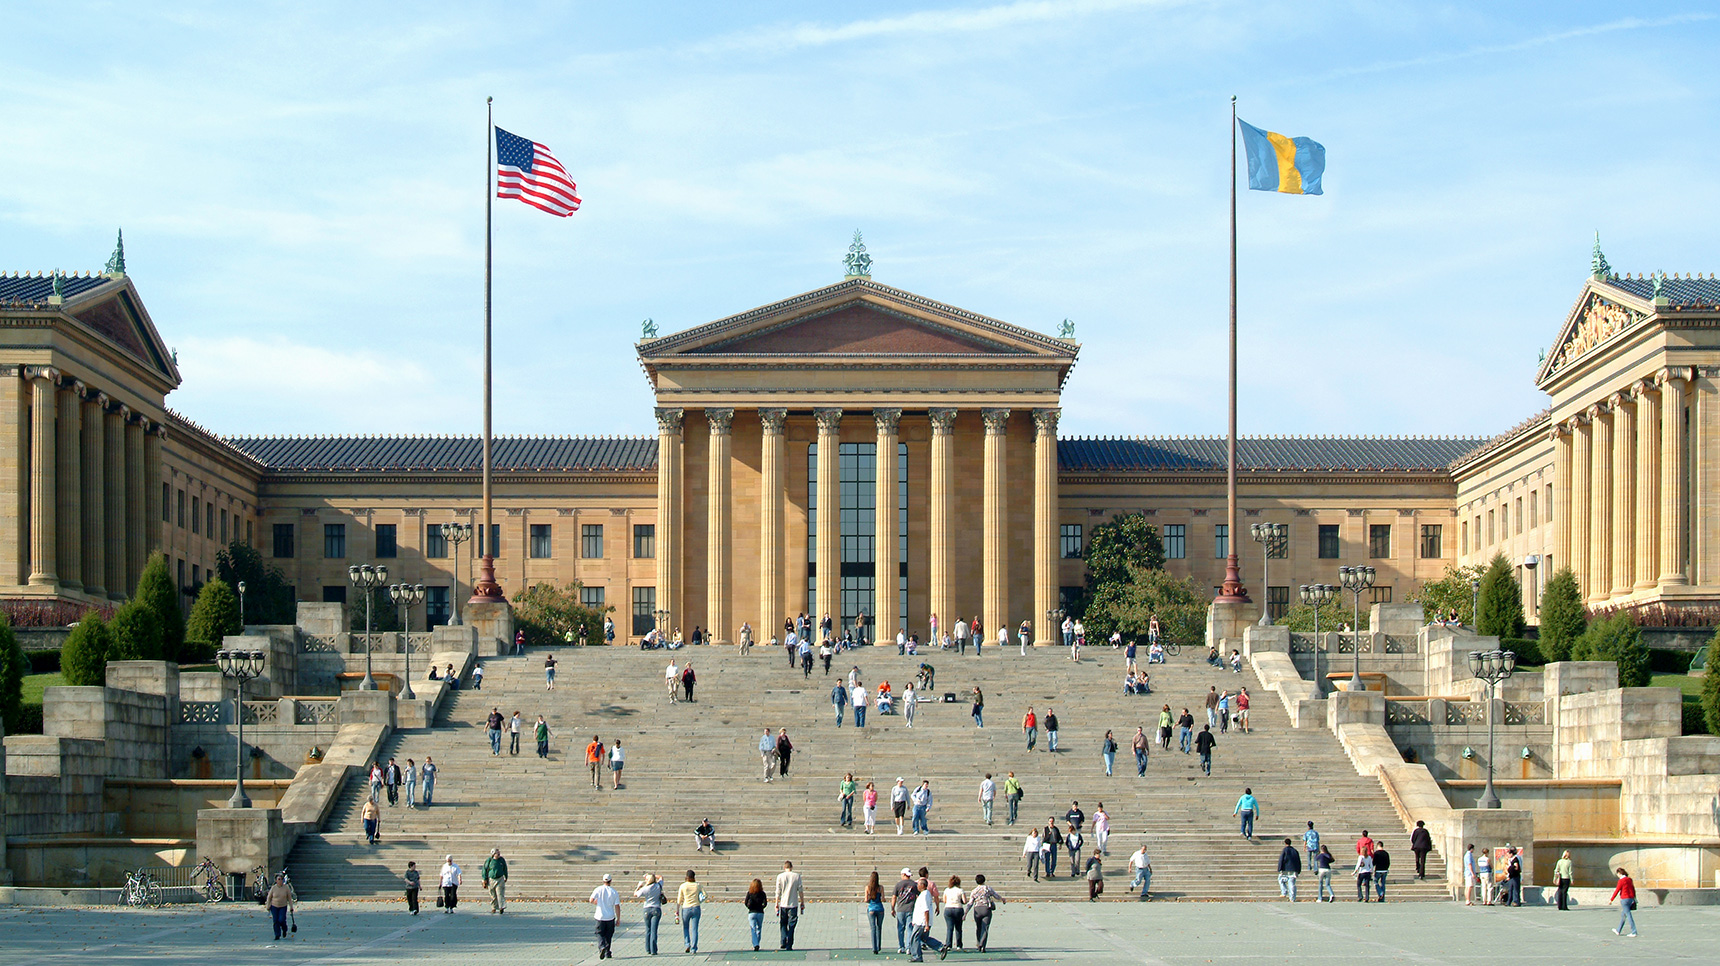 The Philadelphia Museum of Art